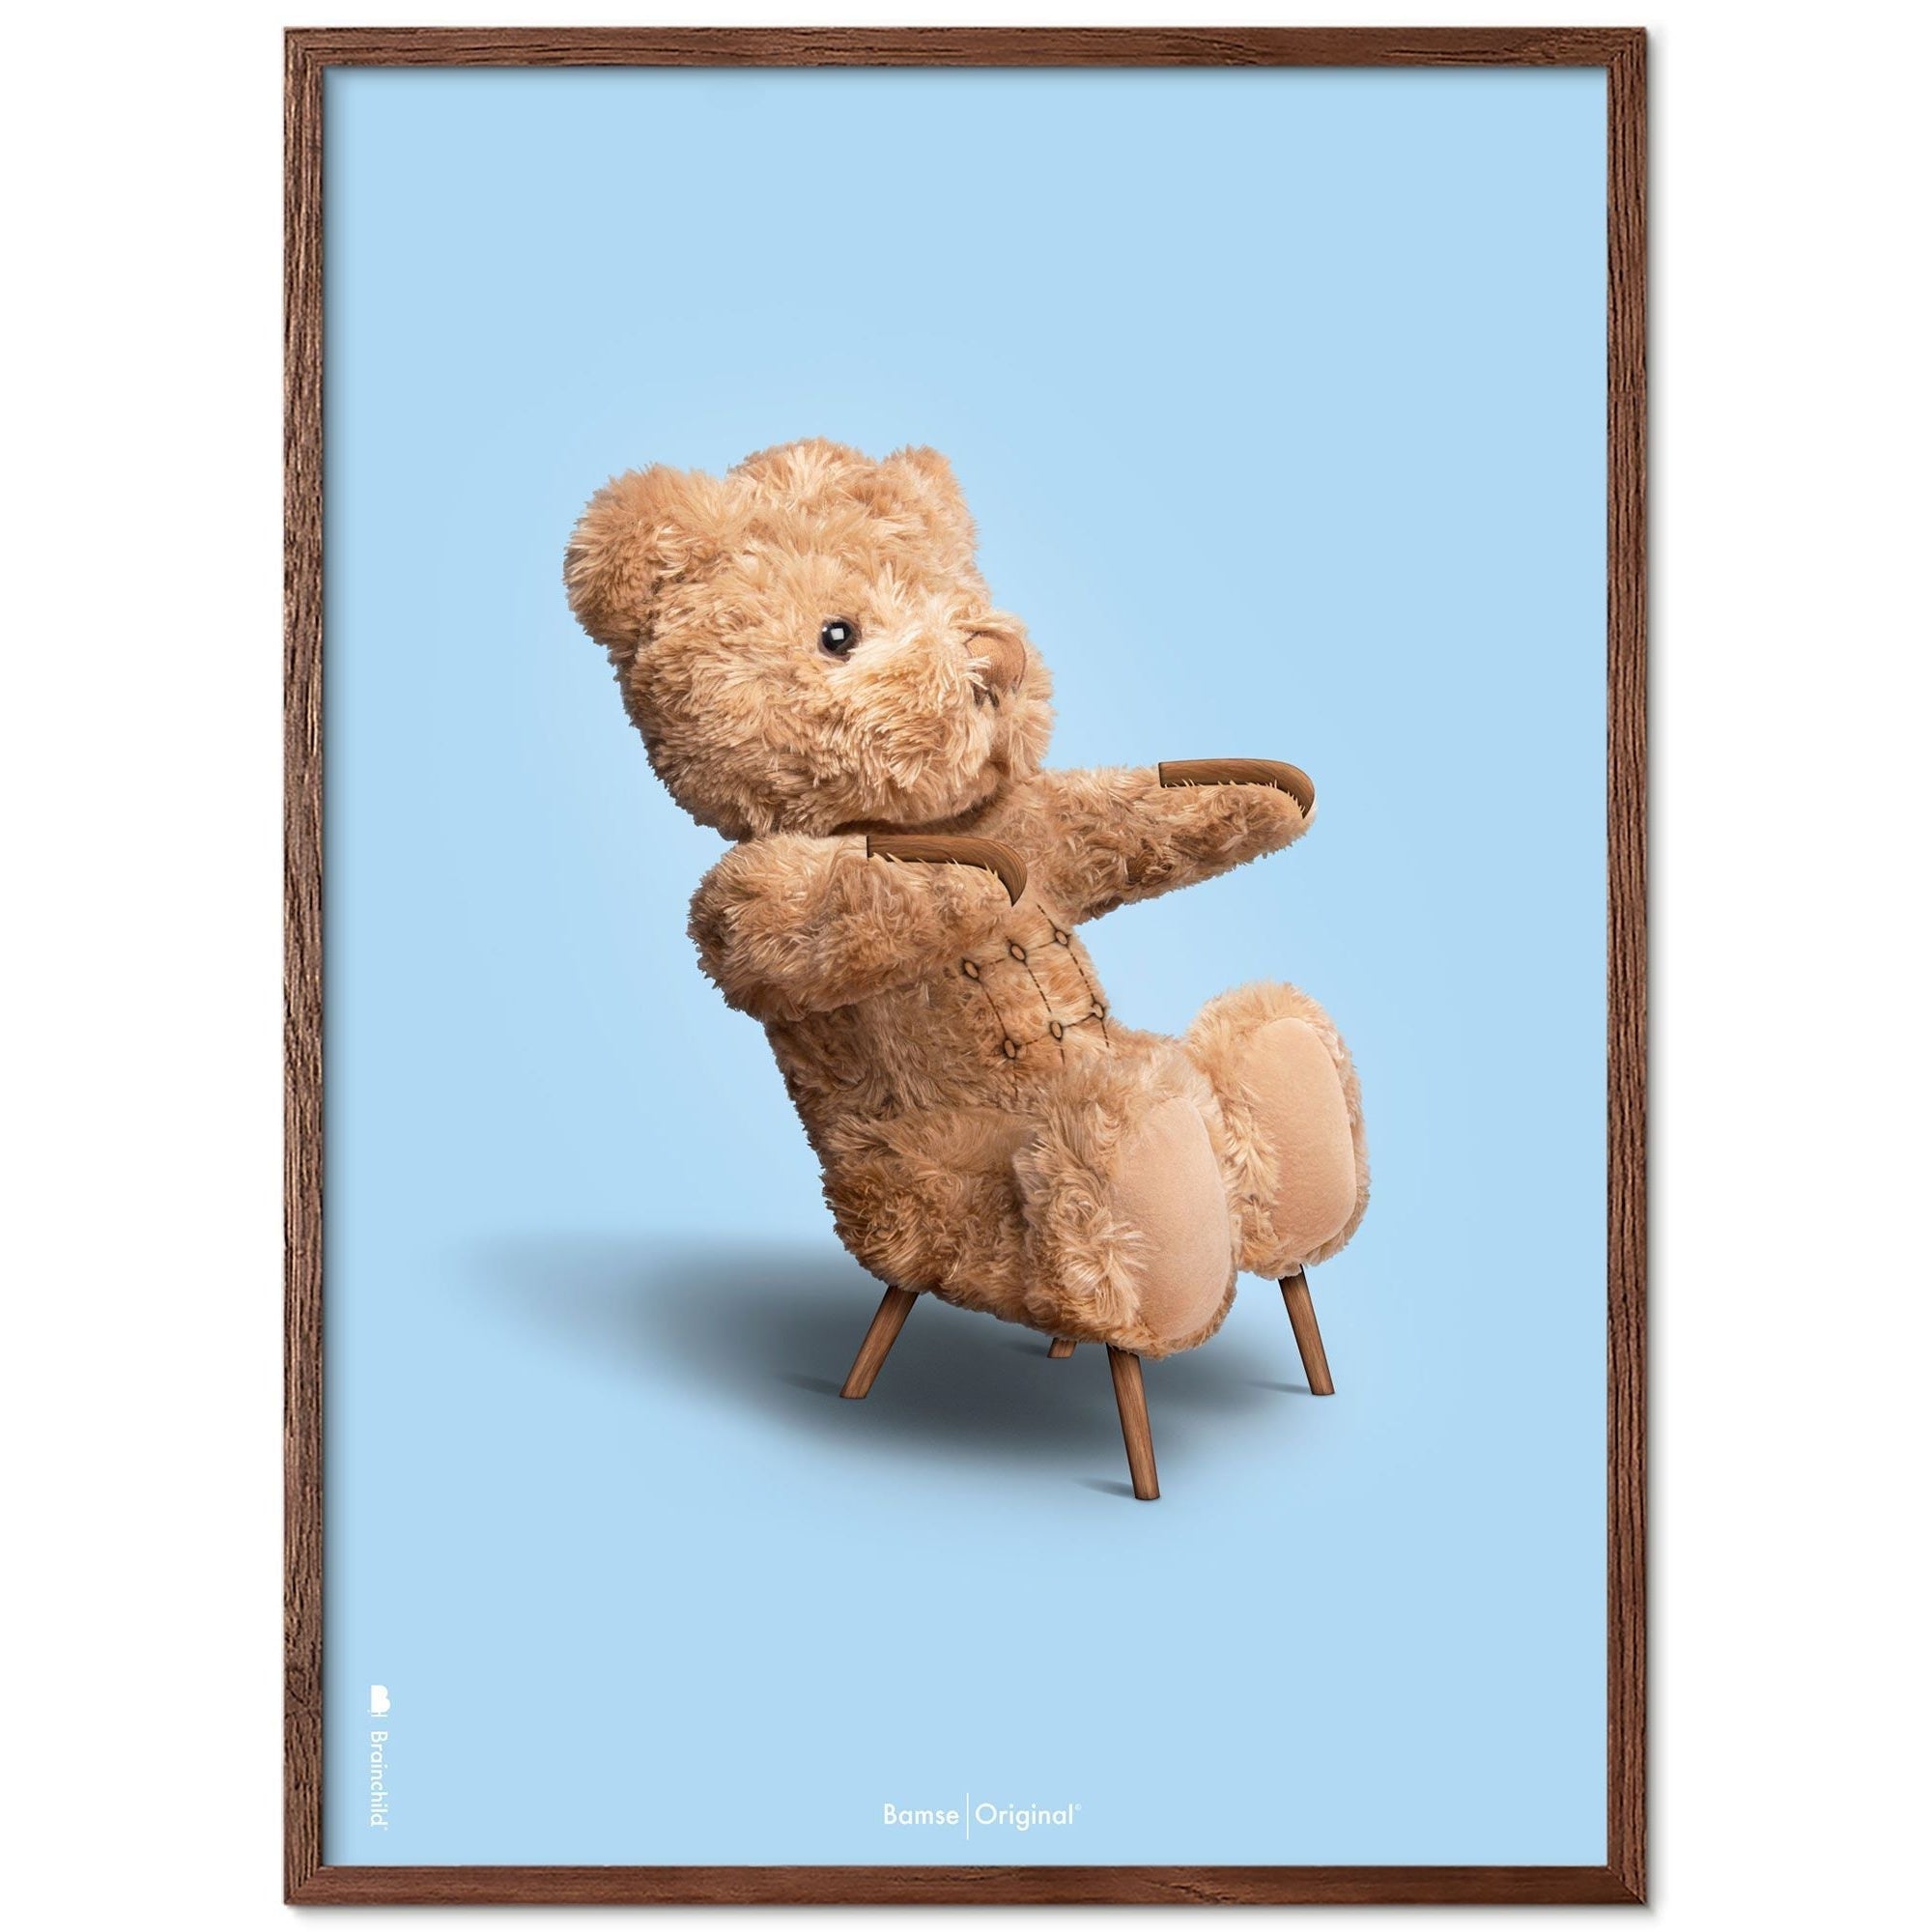 Brainchild Teddy Bear Classic Poster Frame Made Of Dark Wood Ram 30x40 Cm, Light Blue Background